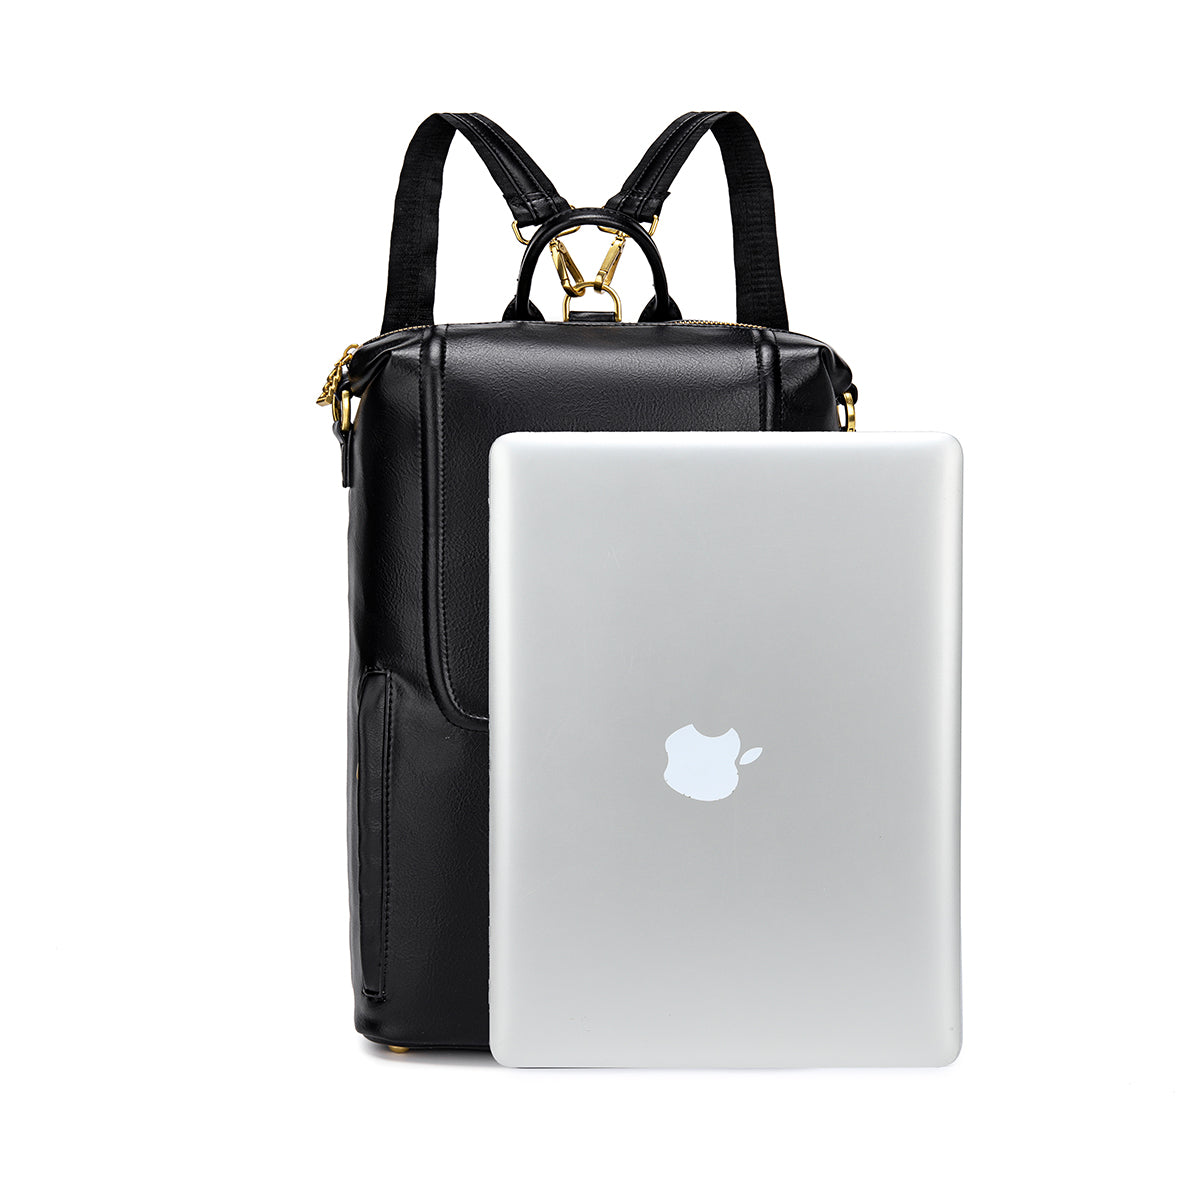 Bags - Pixie Mood - Blossom Small Backpack - Black - PLENTY